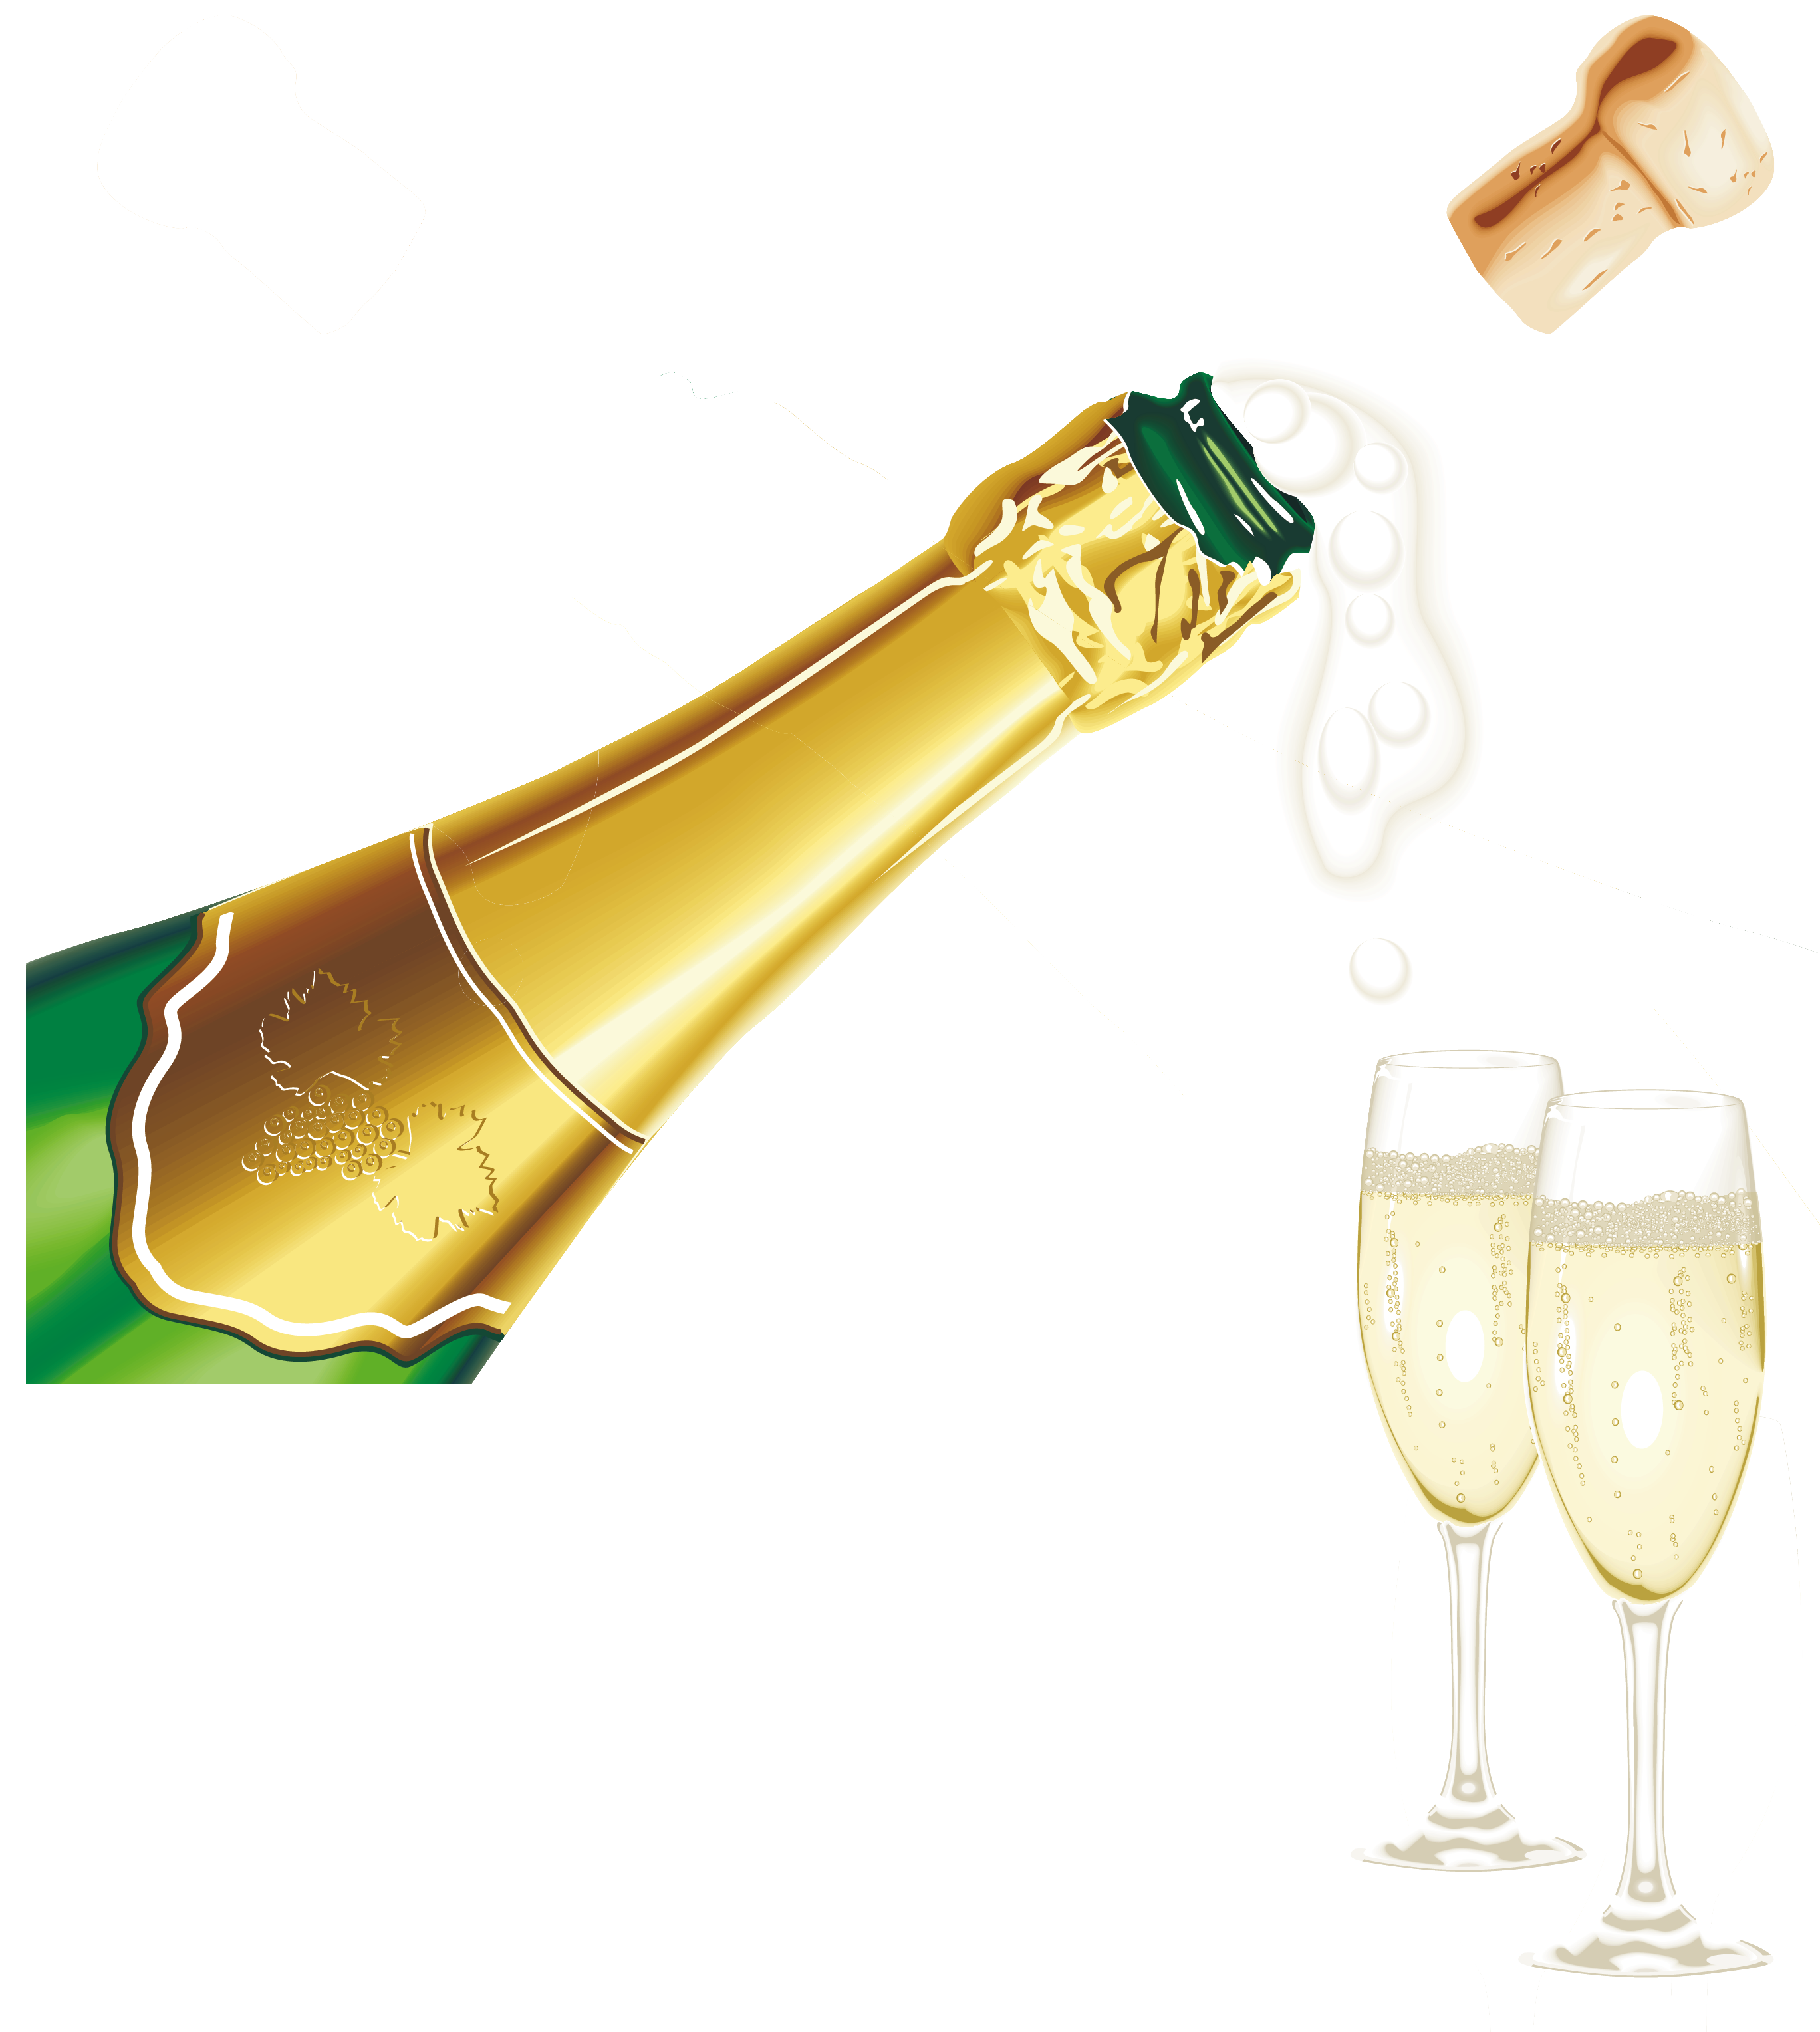 Champagne Bottle PNG Image